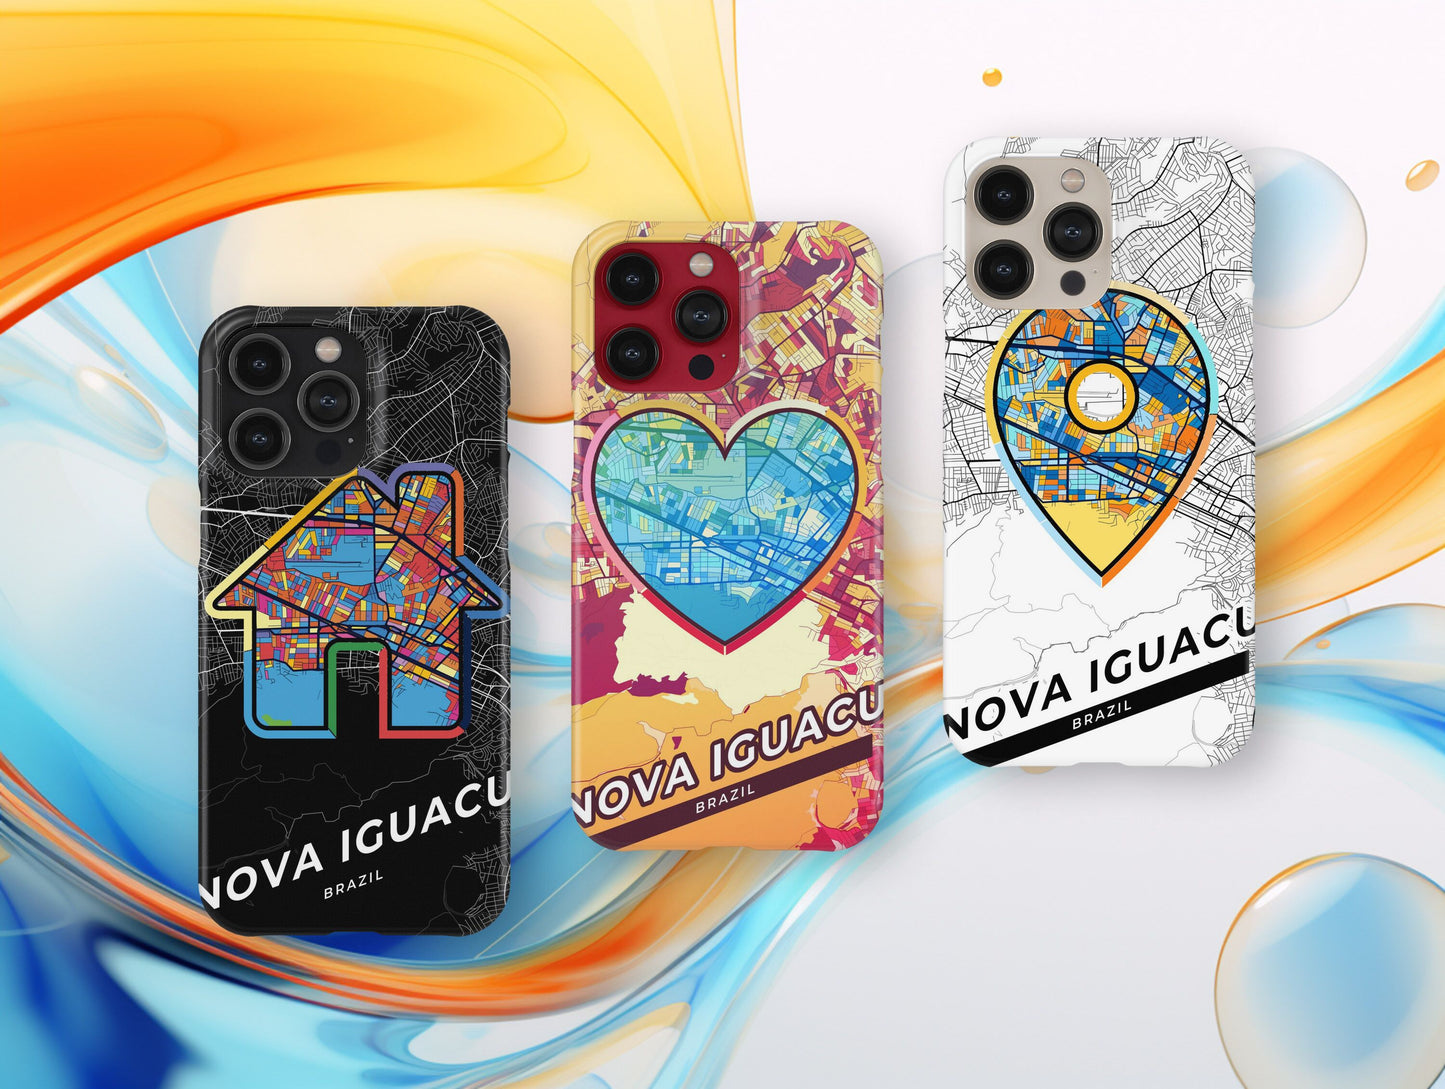 Nova Iguacu Brazil slim phone case with colorful icon